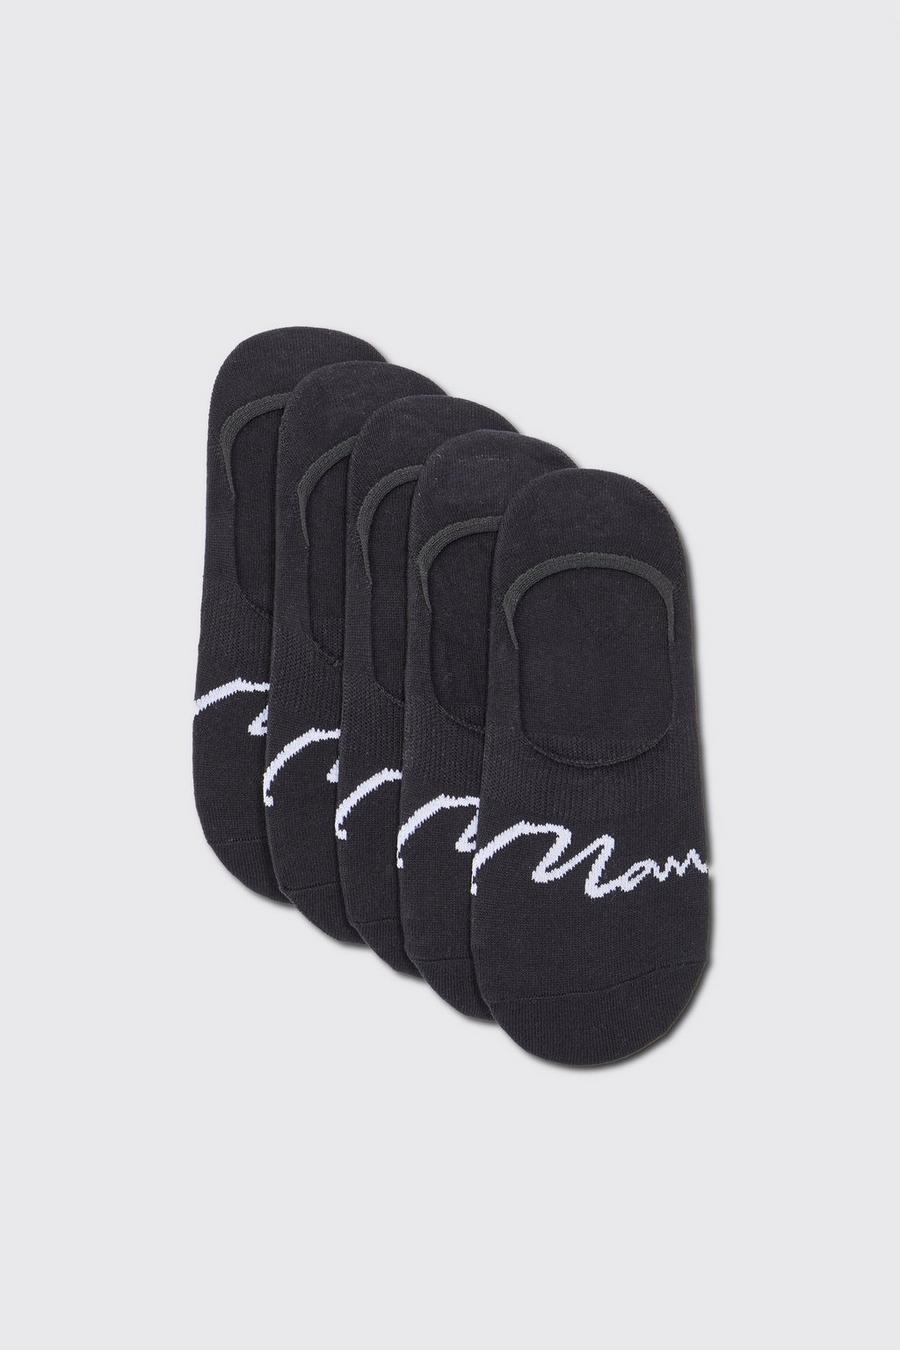 Pack de 5 pares de calcetines invisibles con firma MAN, Black negro